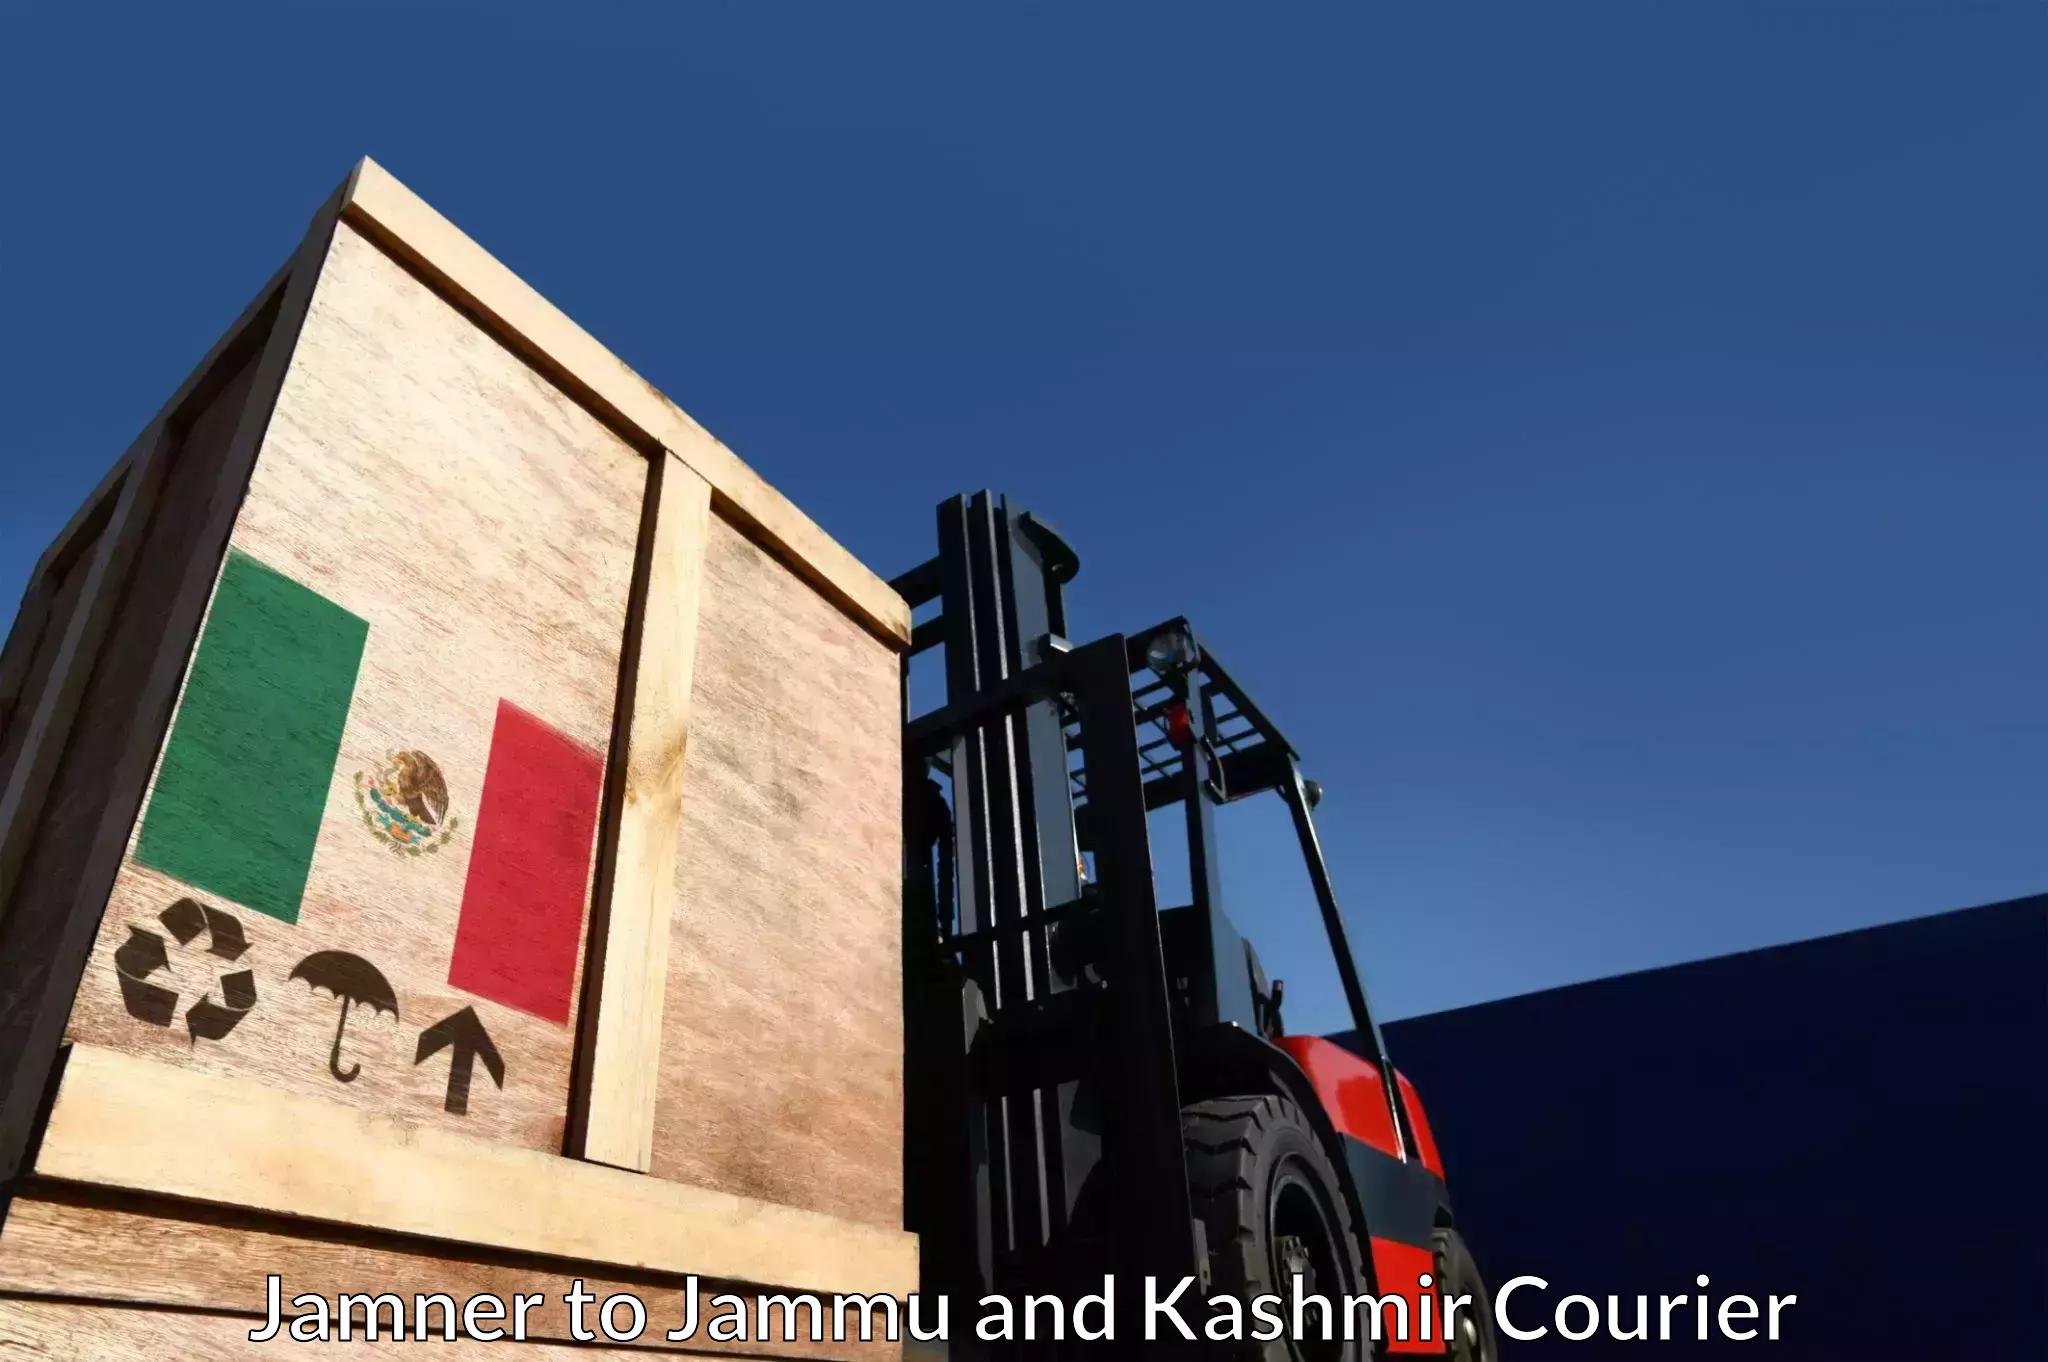 Global courier networks Jamner to Jammu and Kashmir